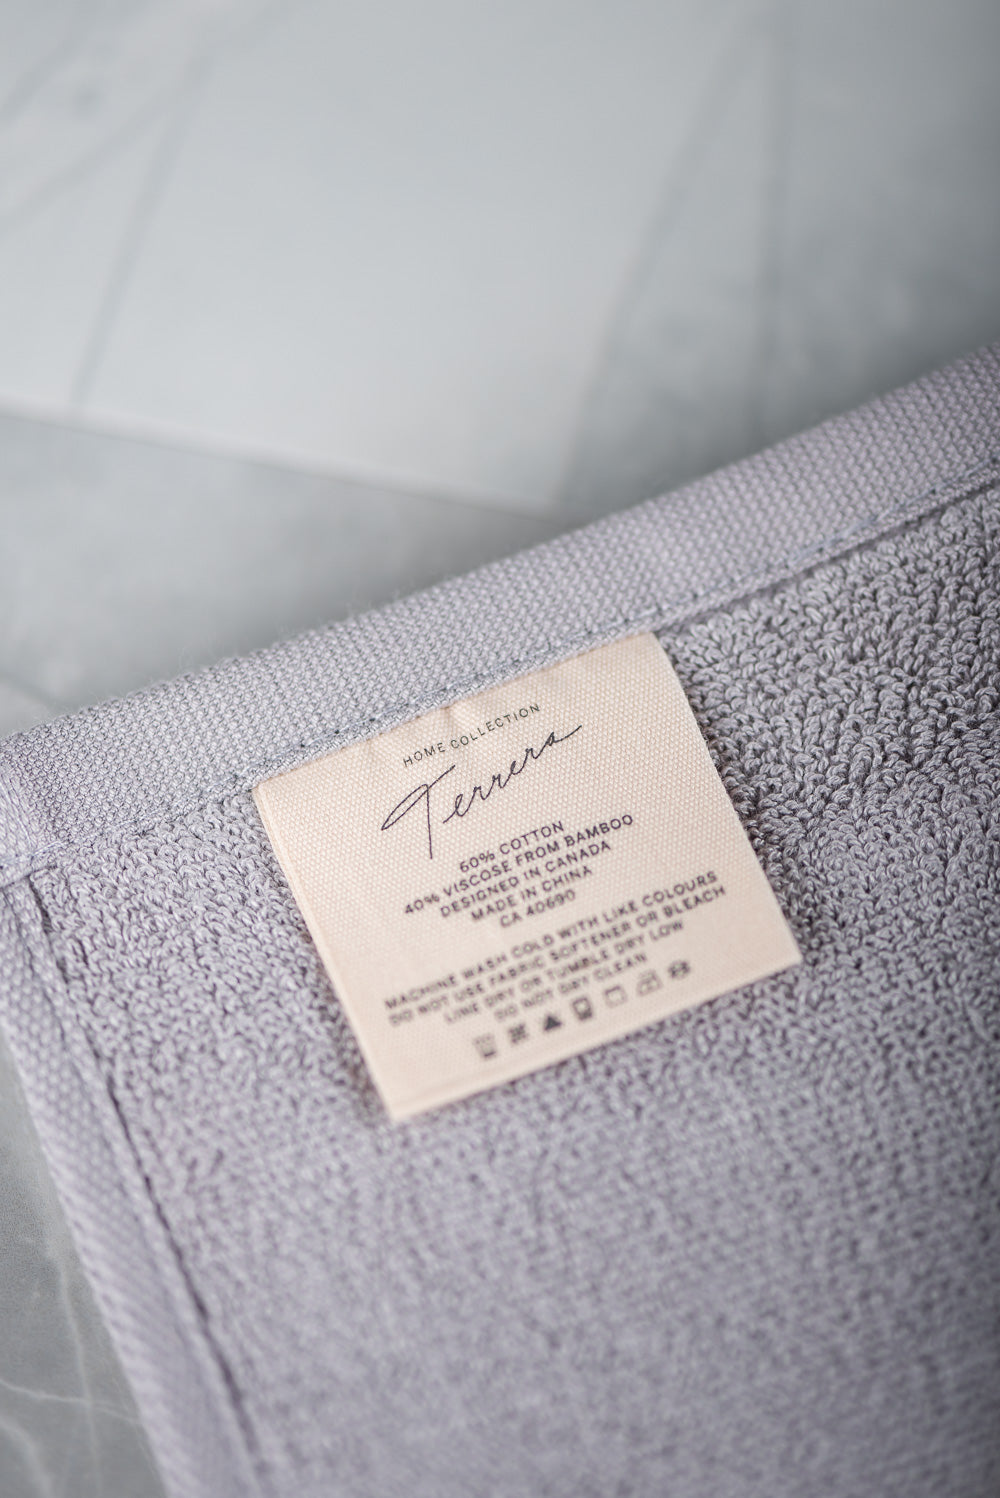 terrera womens grey organic cotton and bamboo towels canada